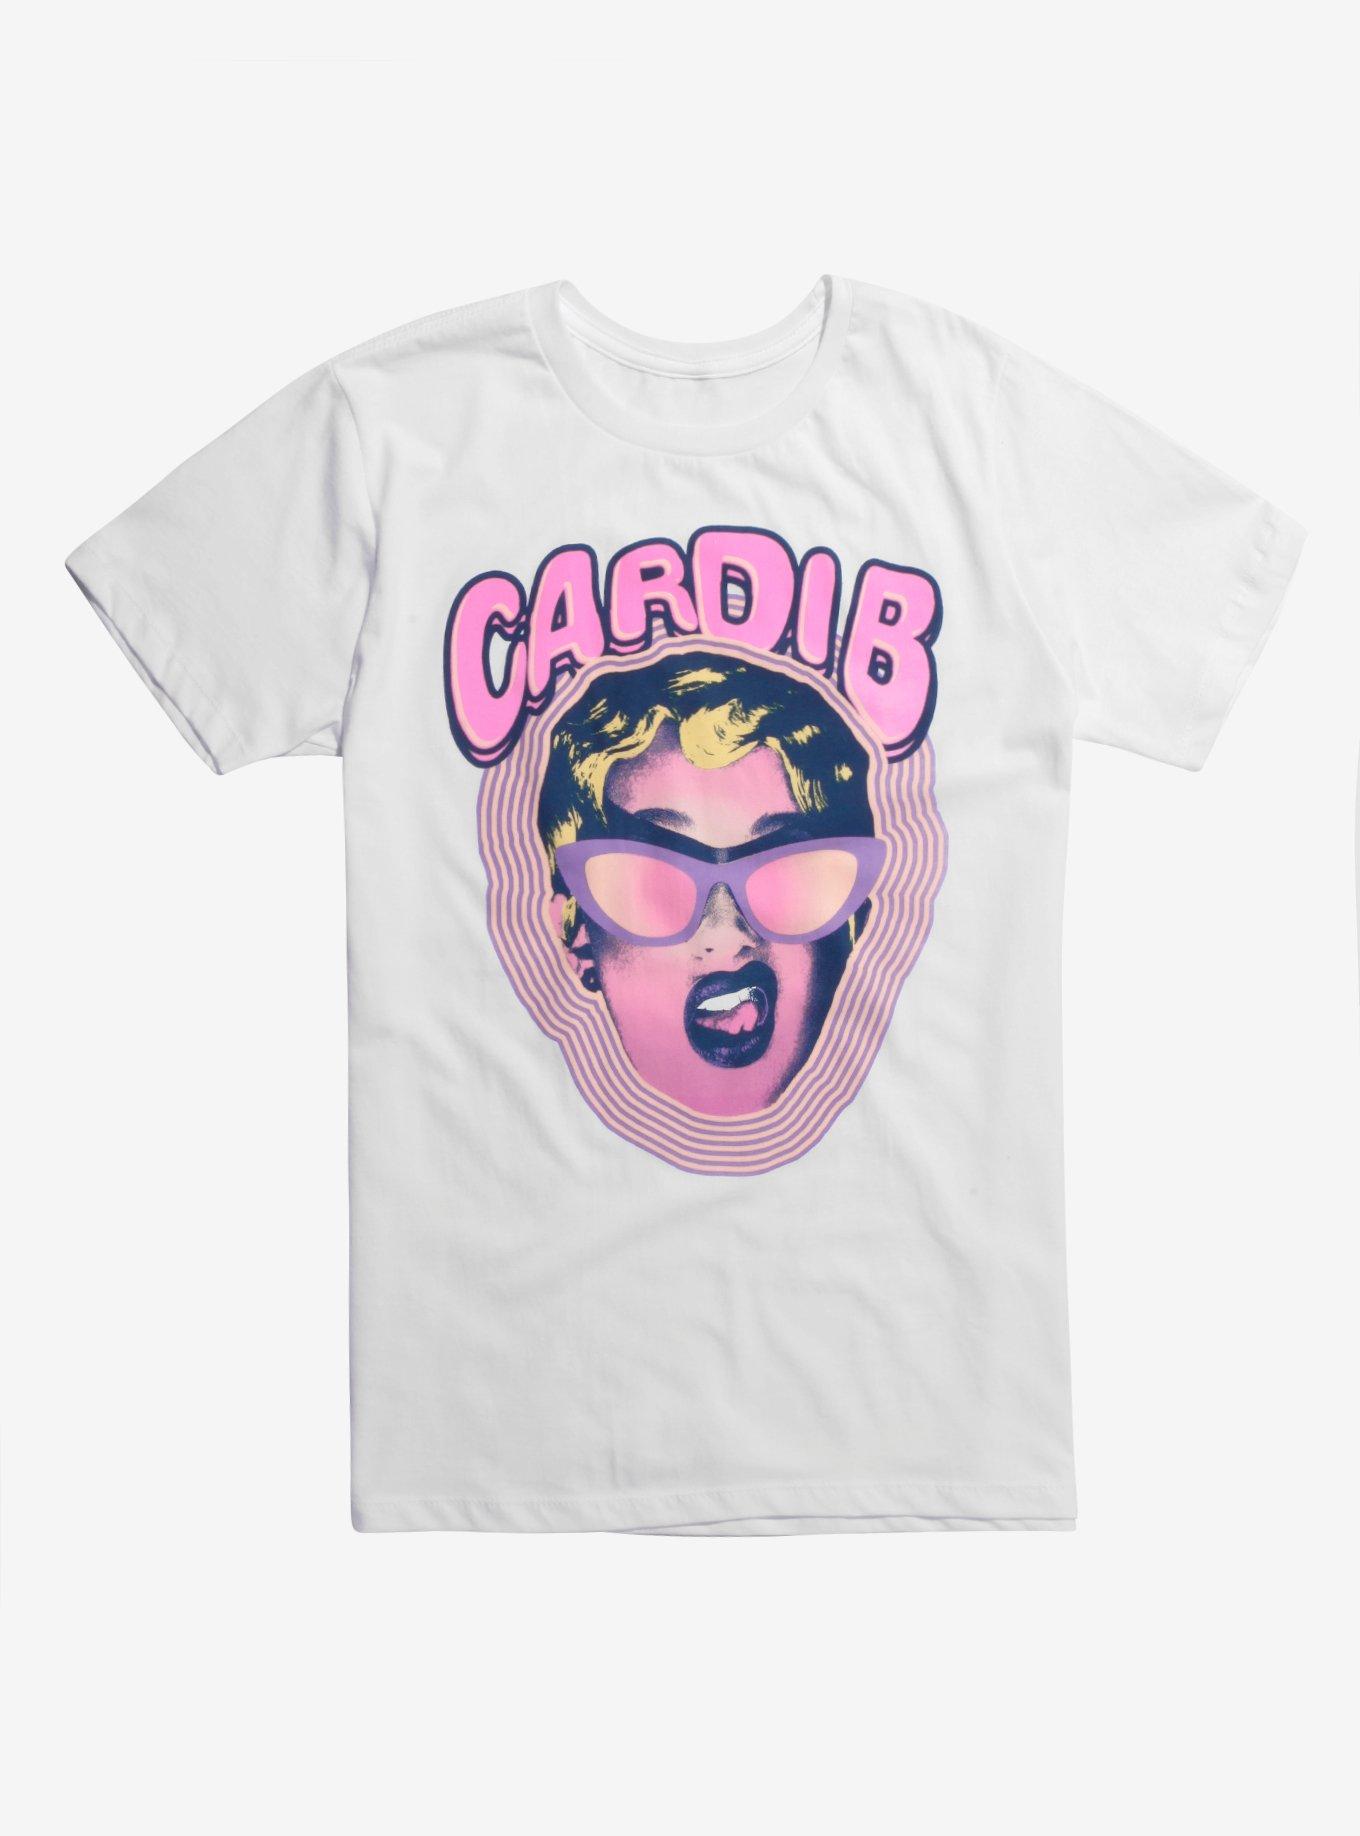 Cardi B Invasion Face T-Shirt, WHITE, hi-res